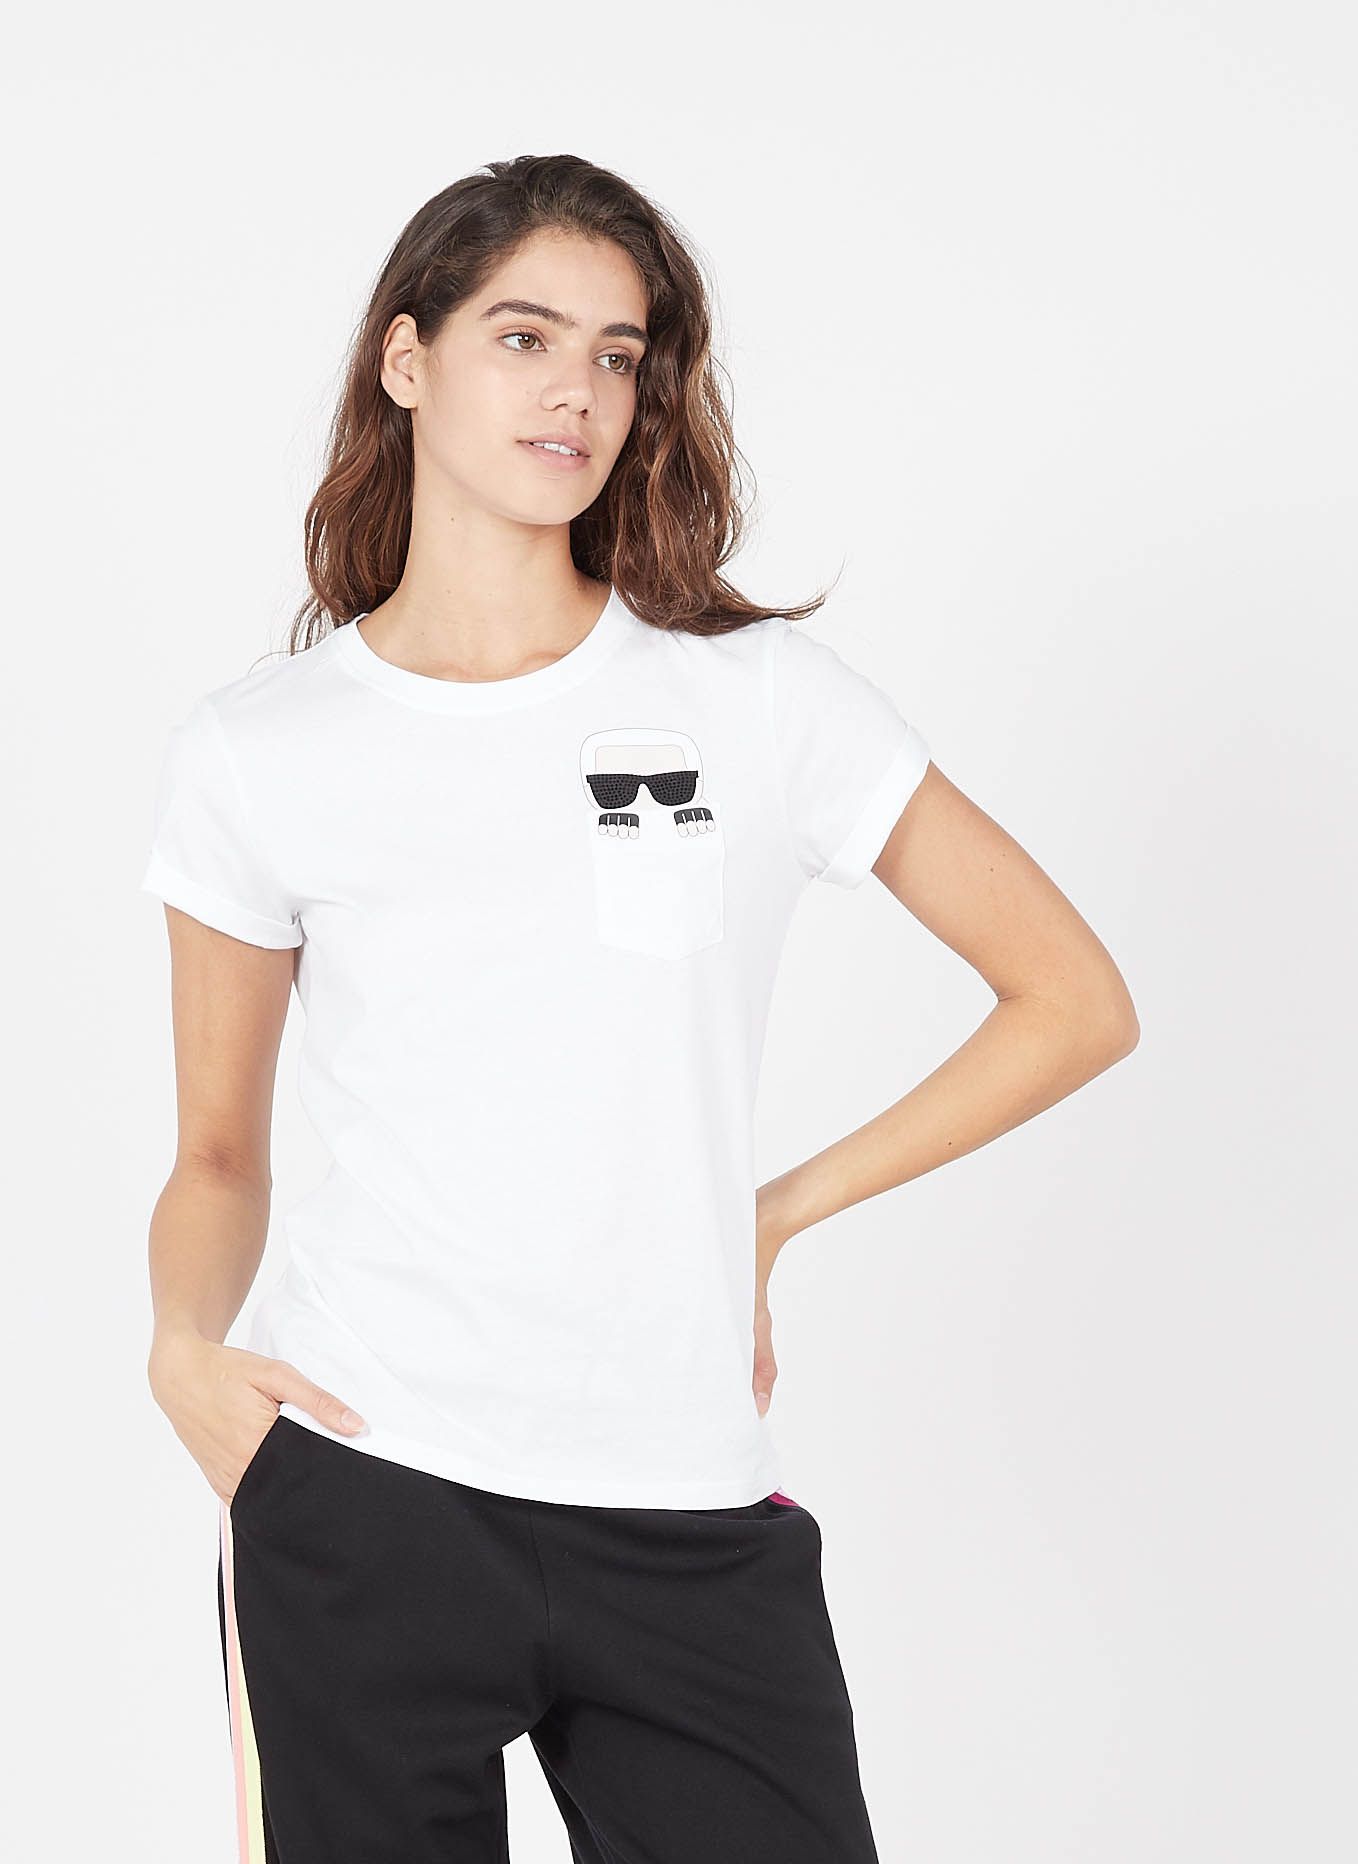 Mode & Accessoires Kleidung Tops Blusentops Karl Lagerfeld Tetris Print Shirt Damen Bluse 